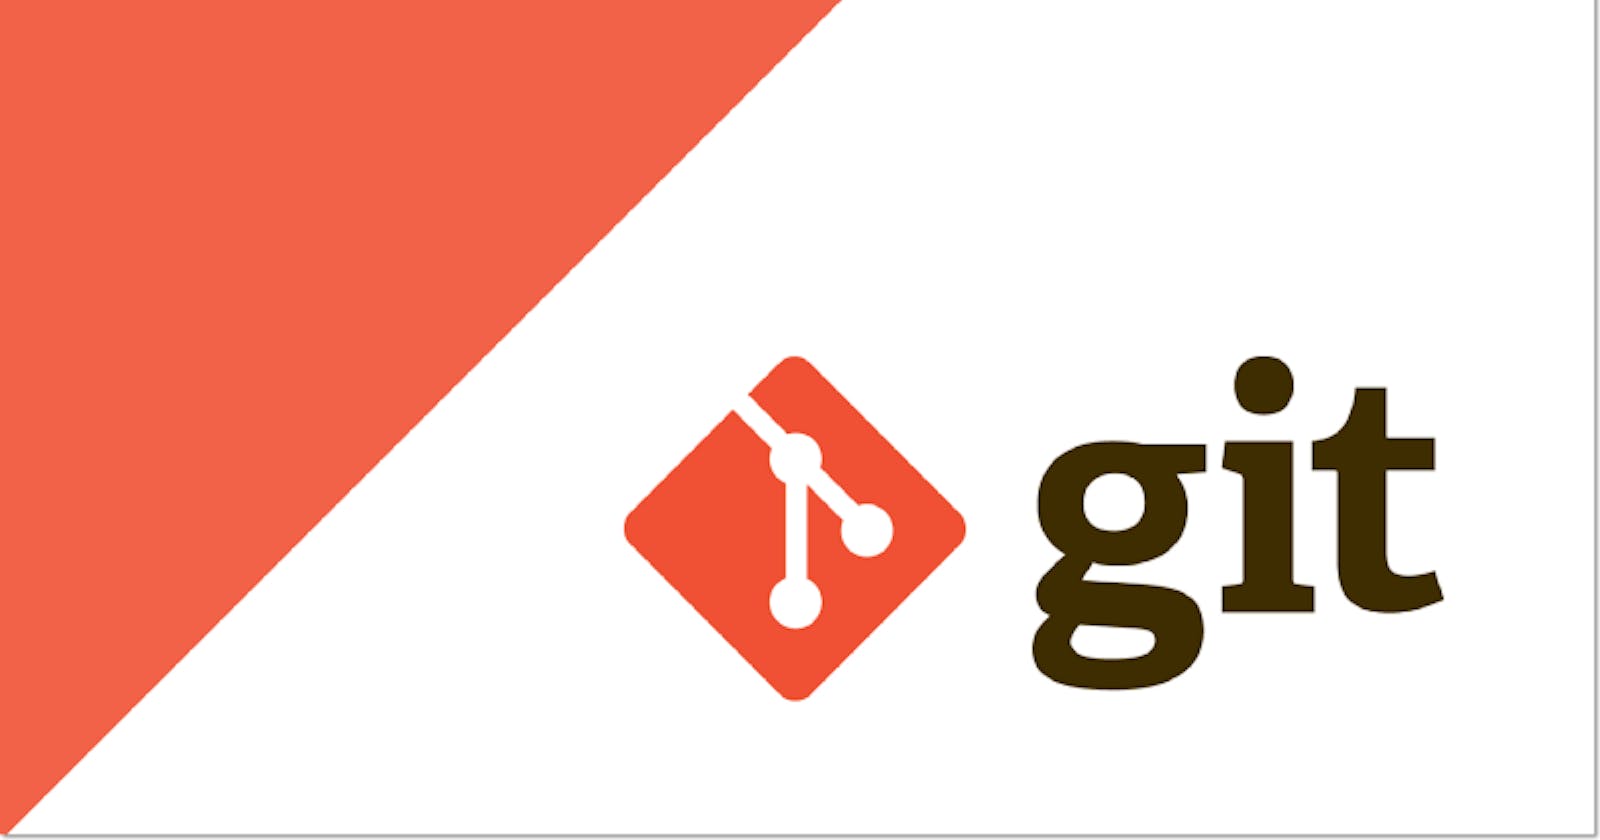 Git Basics